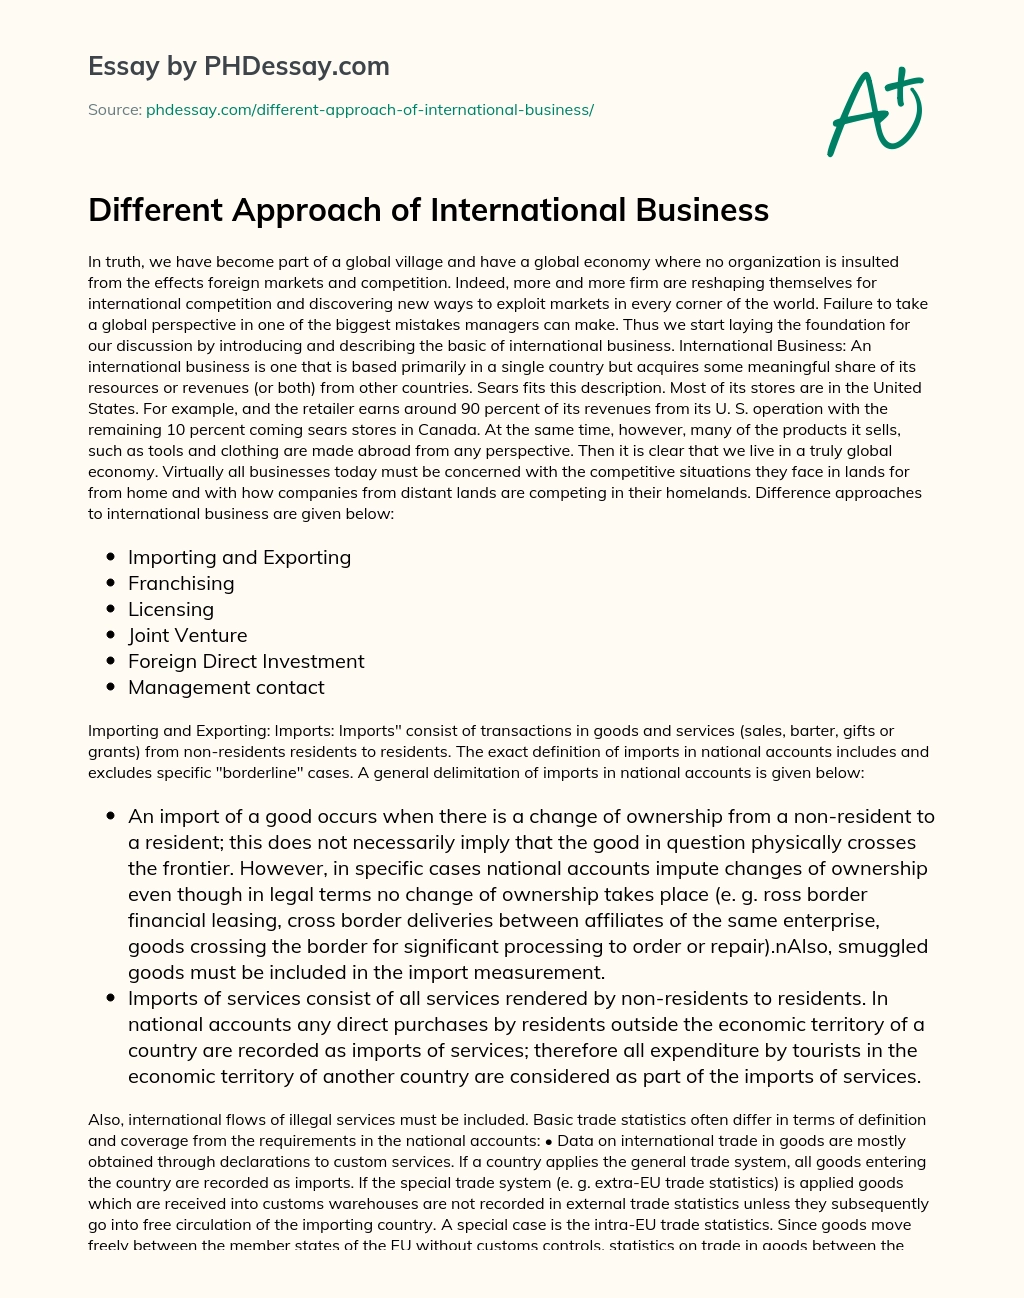 Different Approach of International Business essay